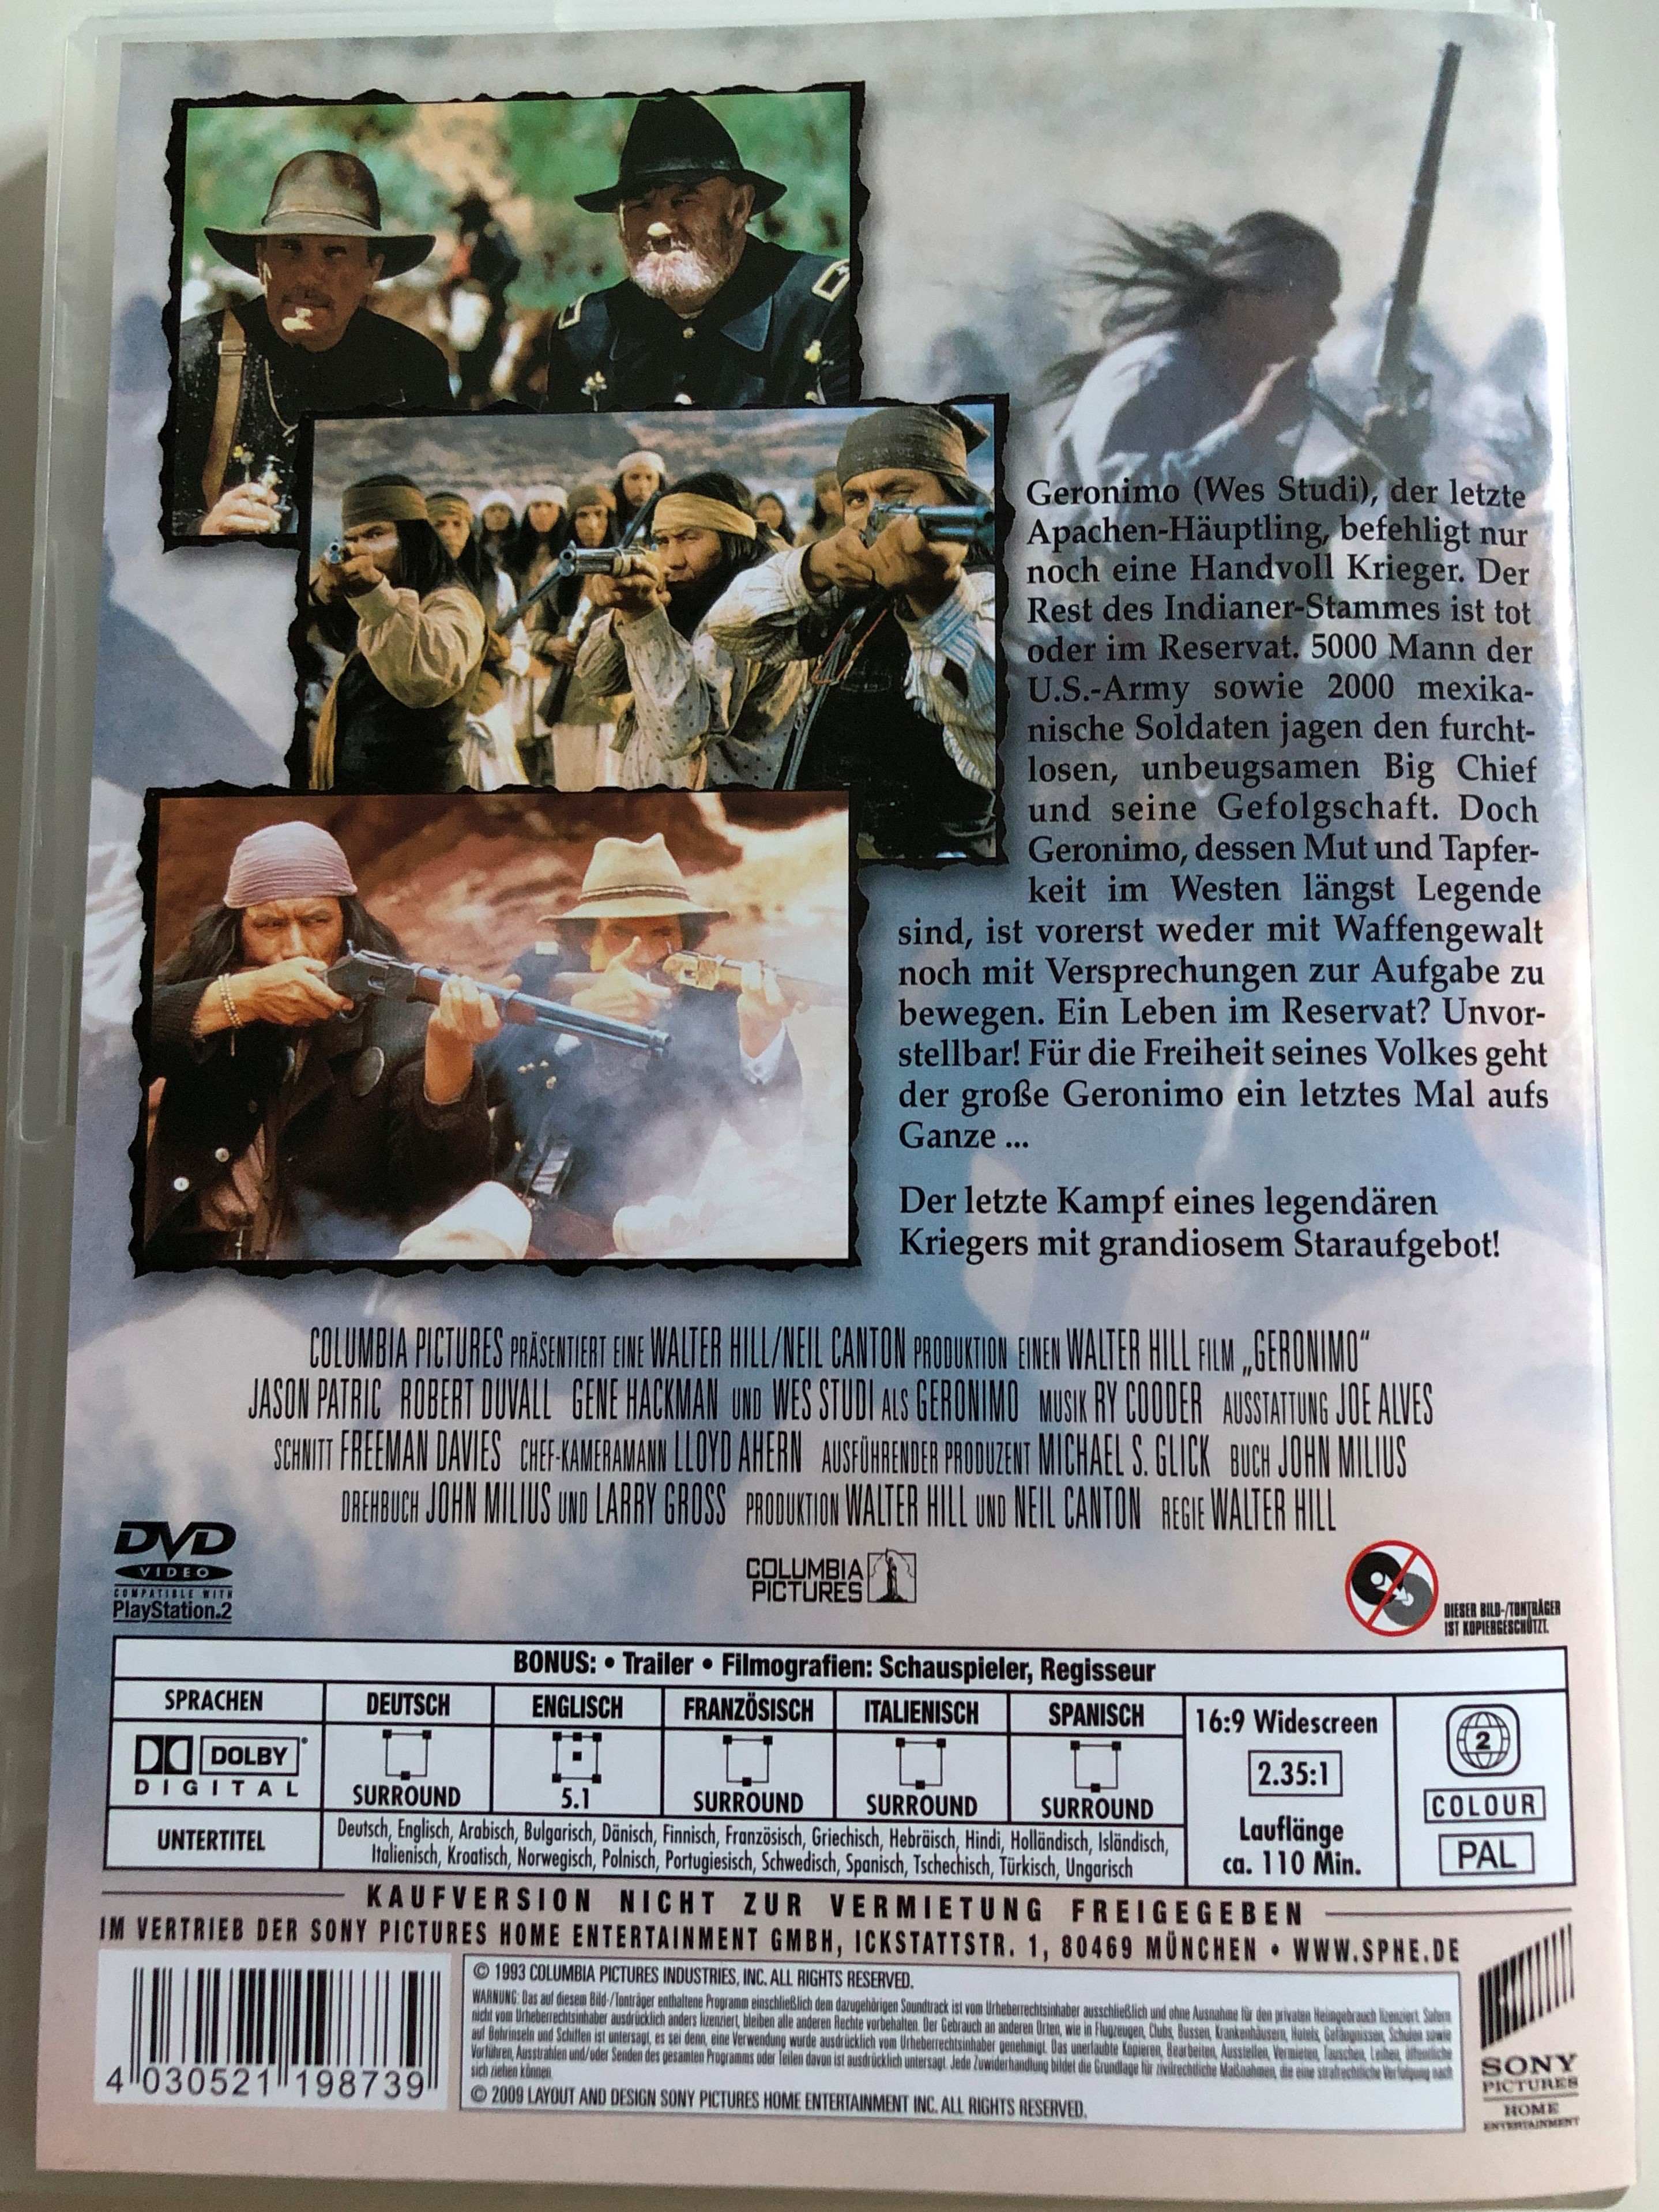 geronimo-das-blut-der-apachen-dvd-1993-geronimo-directed-by-walter-hill-starring-jason-patric-robert-duvall-gene-hackman-wes-studi-2-.jpg